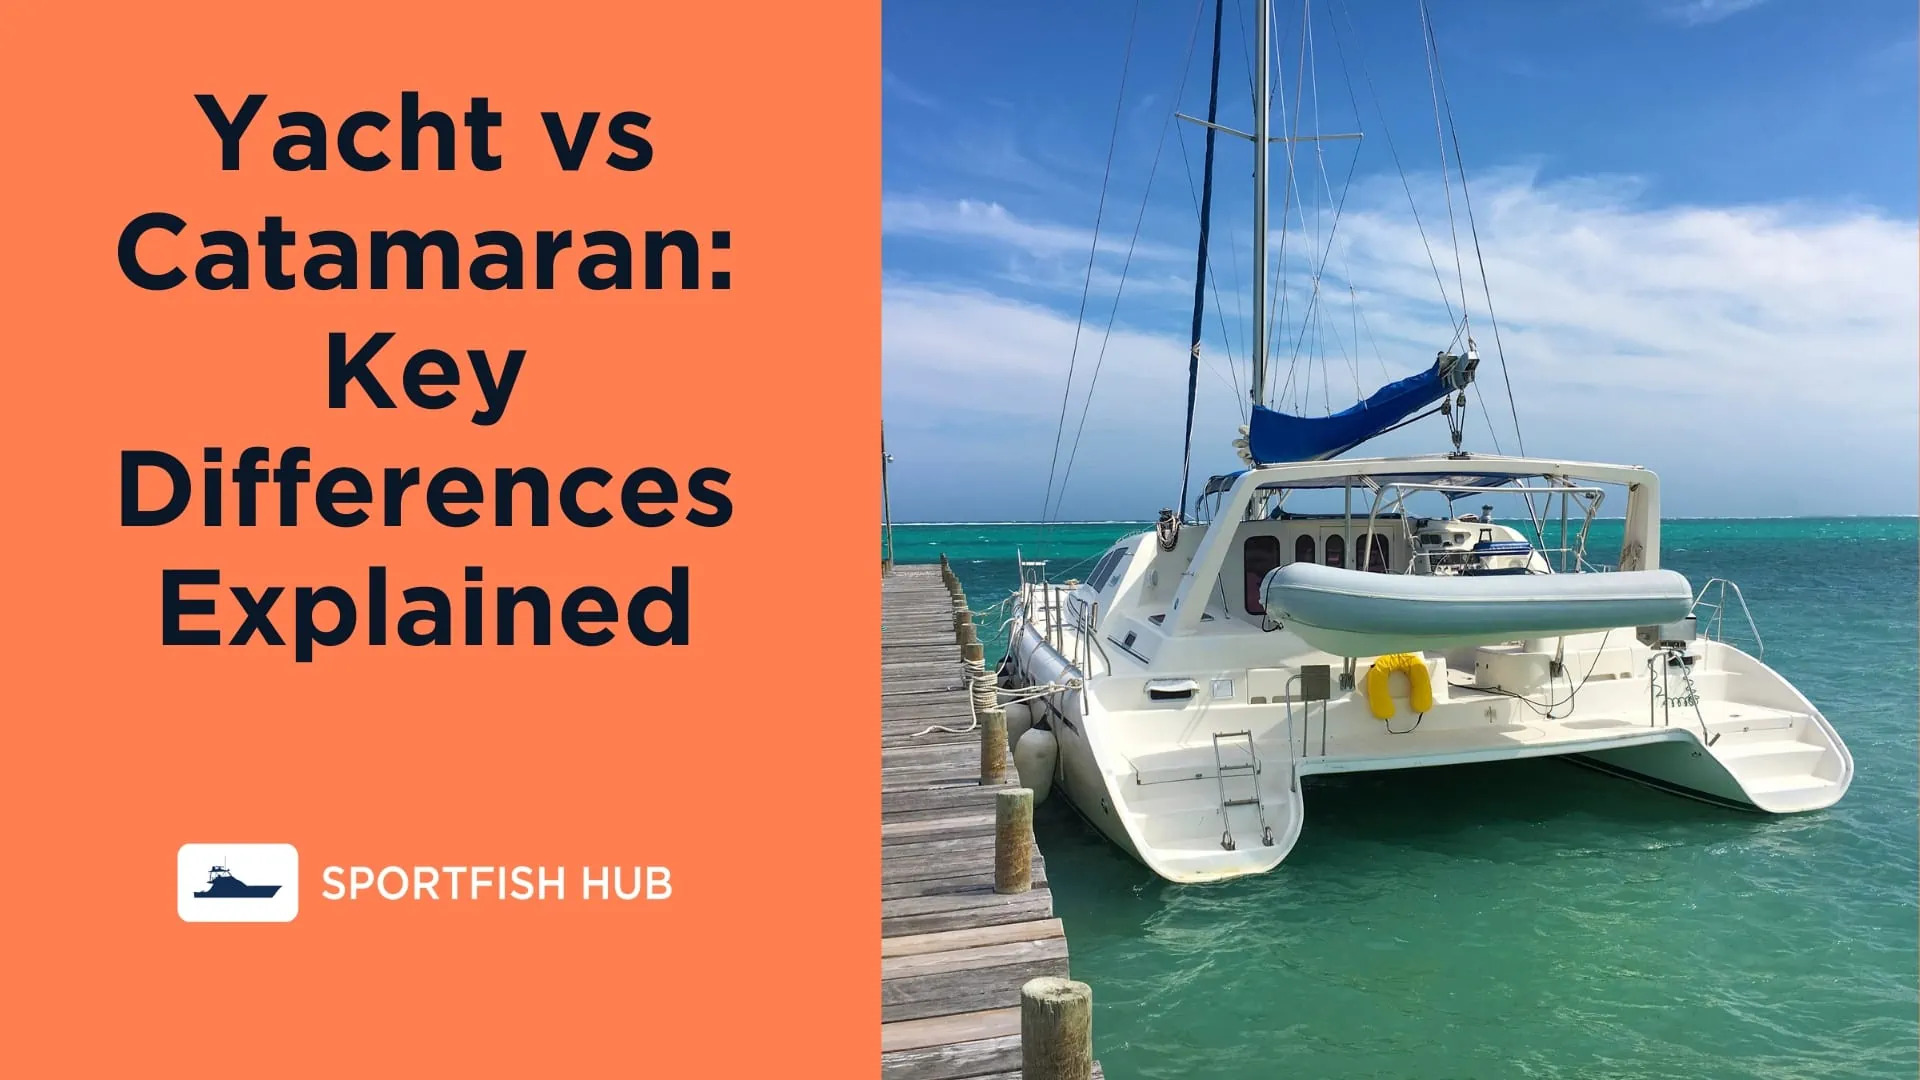 Yacht vs Catamaran Key Differences Explained